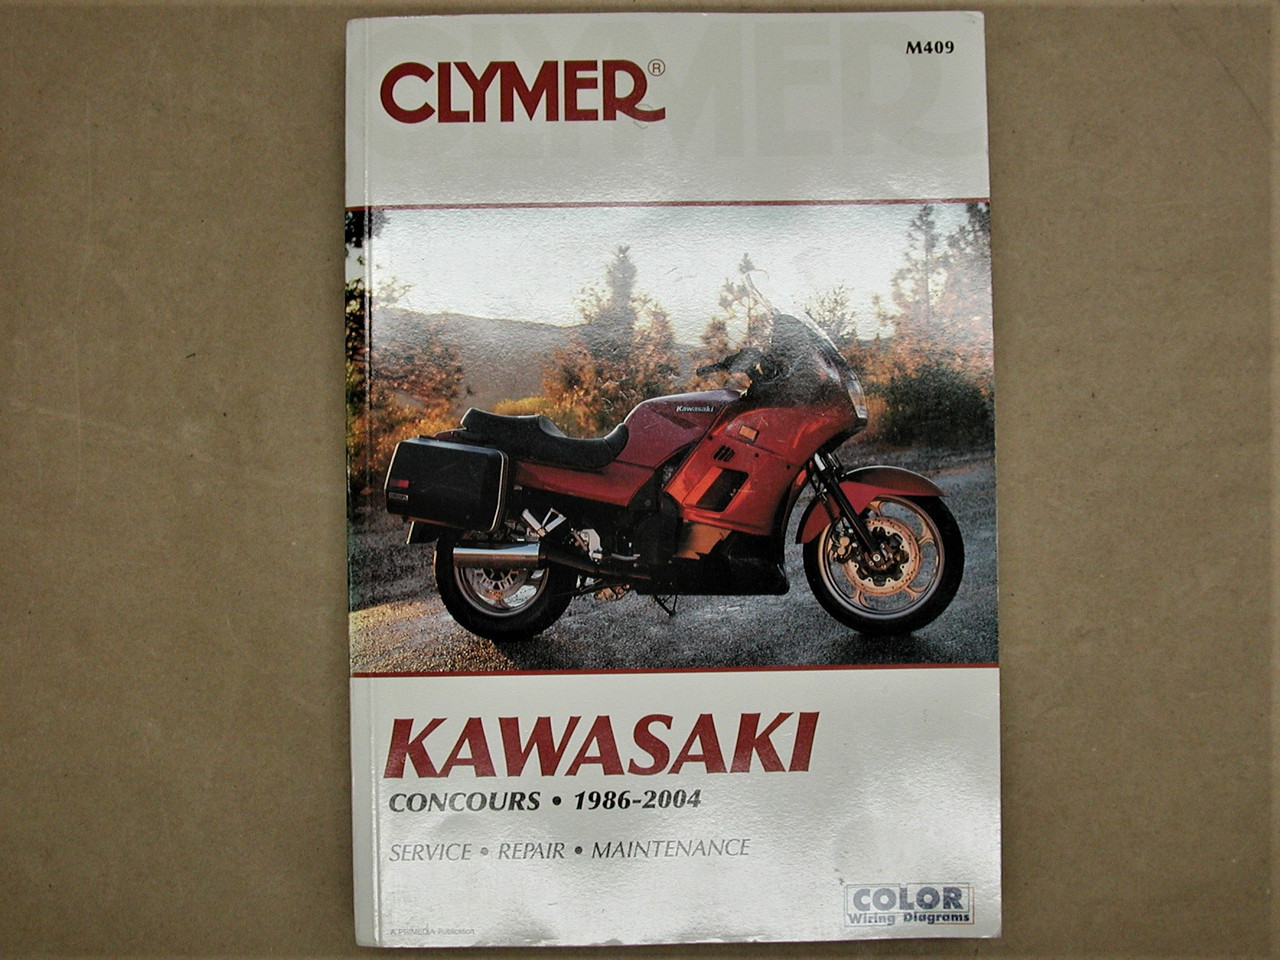 CLYMER KAWASAKI Concours 1986-2004 Service Repair Maintenance M409